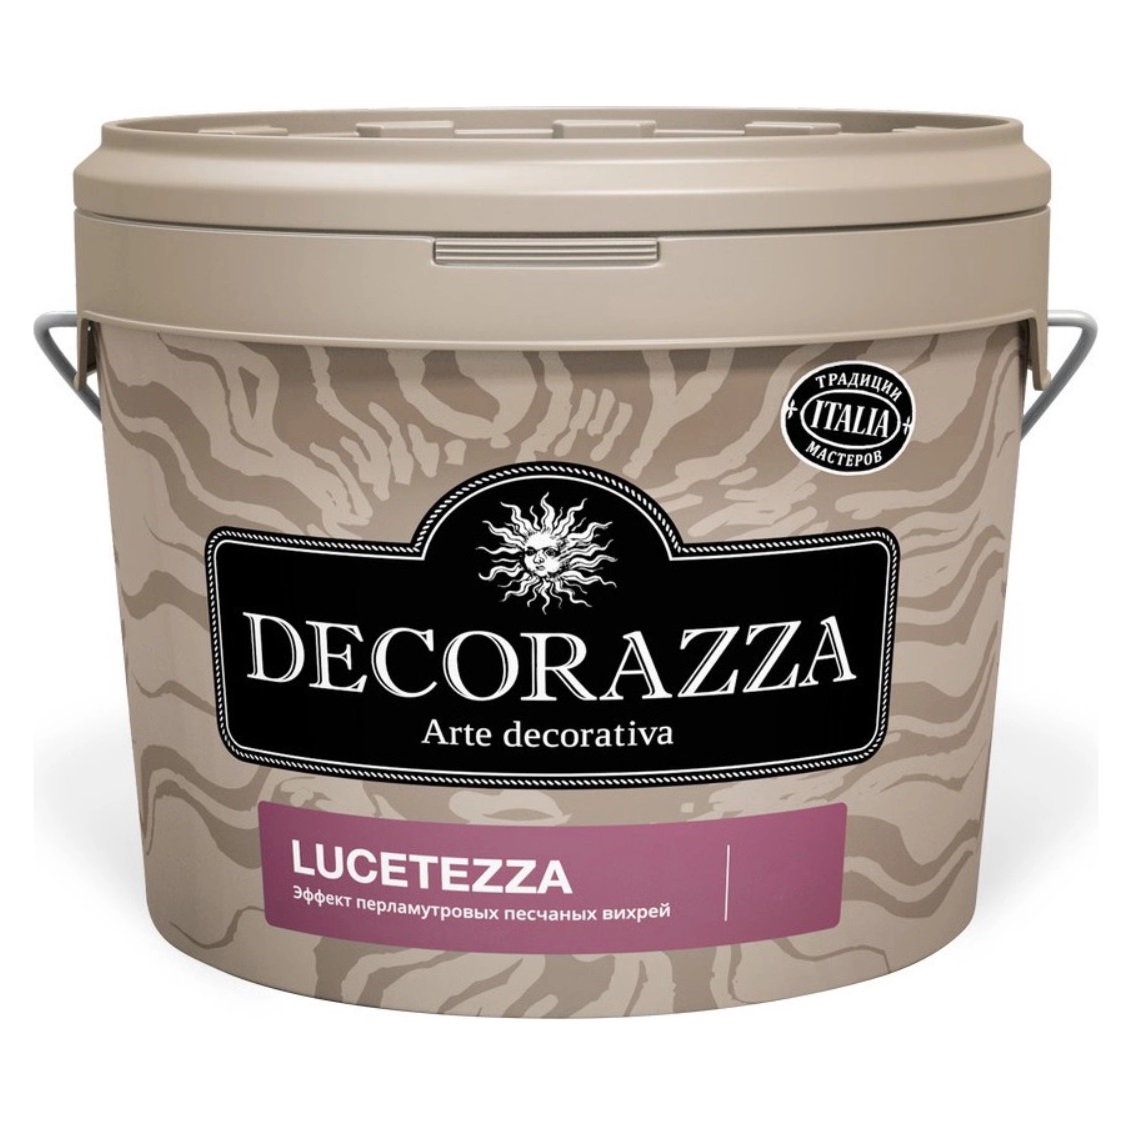 Декоративная краска Decorazza lucetezza база oro 5.0кг краска декоративная decorazza alcantara 5 л 3 5 кг